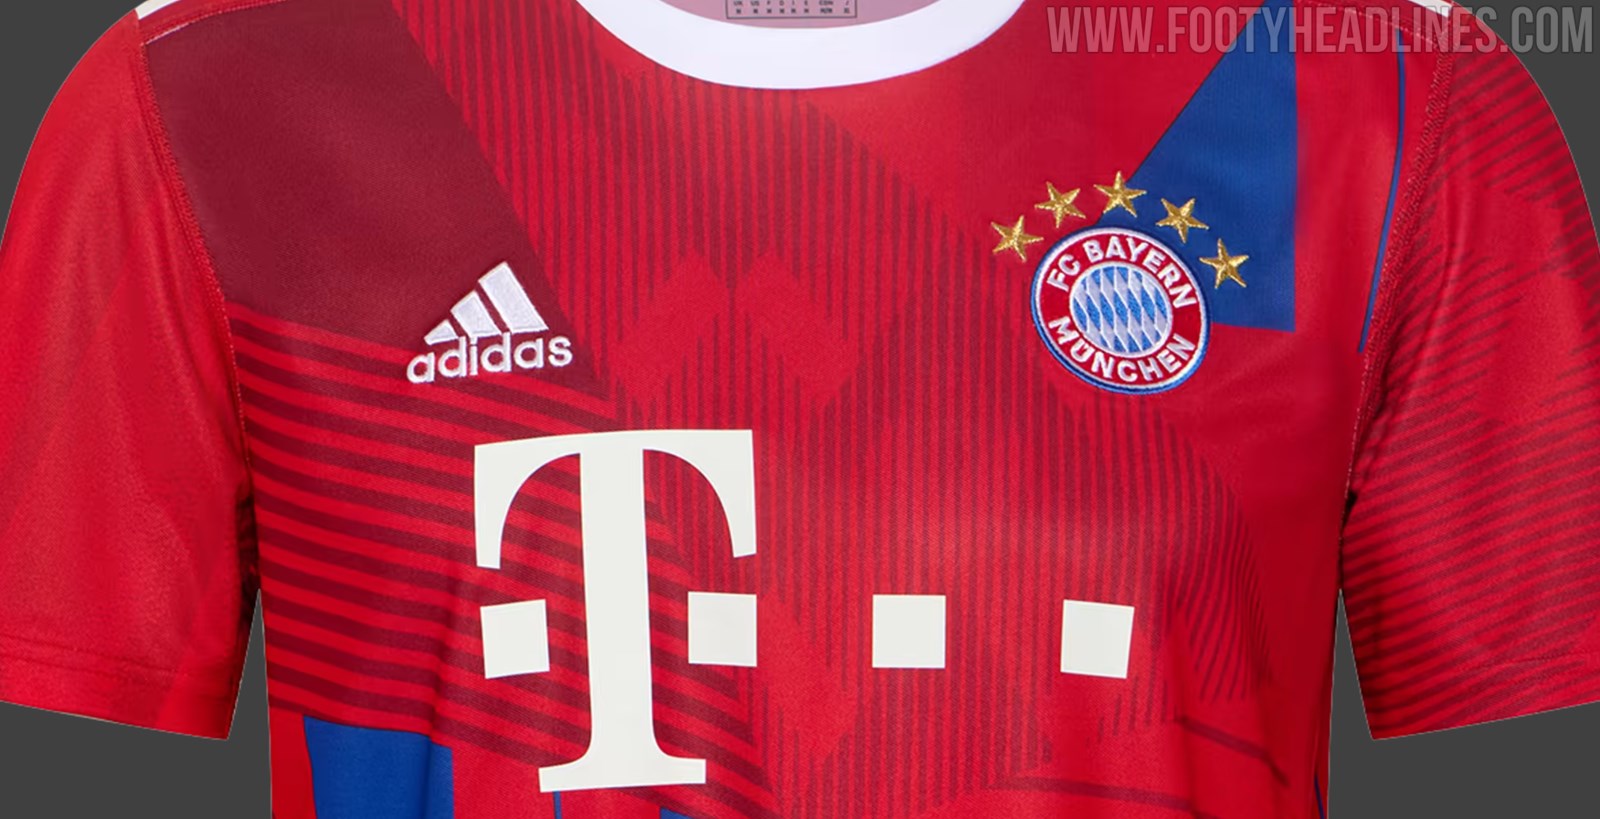 Adidas Bayern 10 Years Kit Released - Again - Footy Headlines